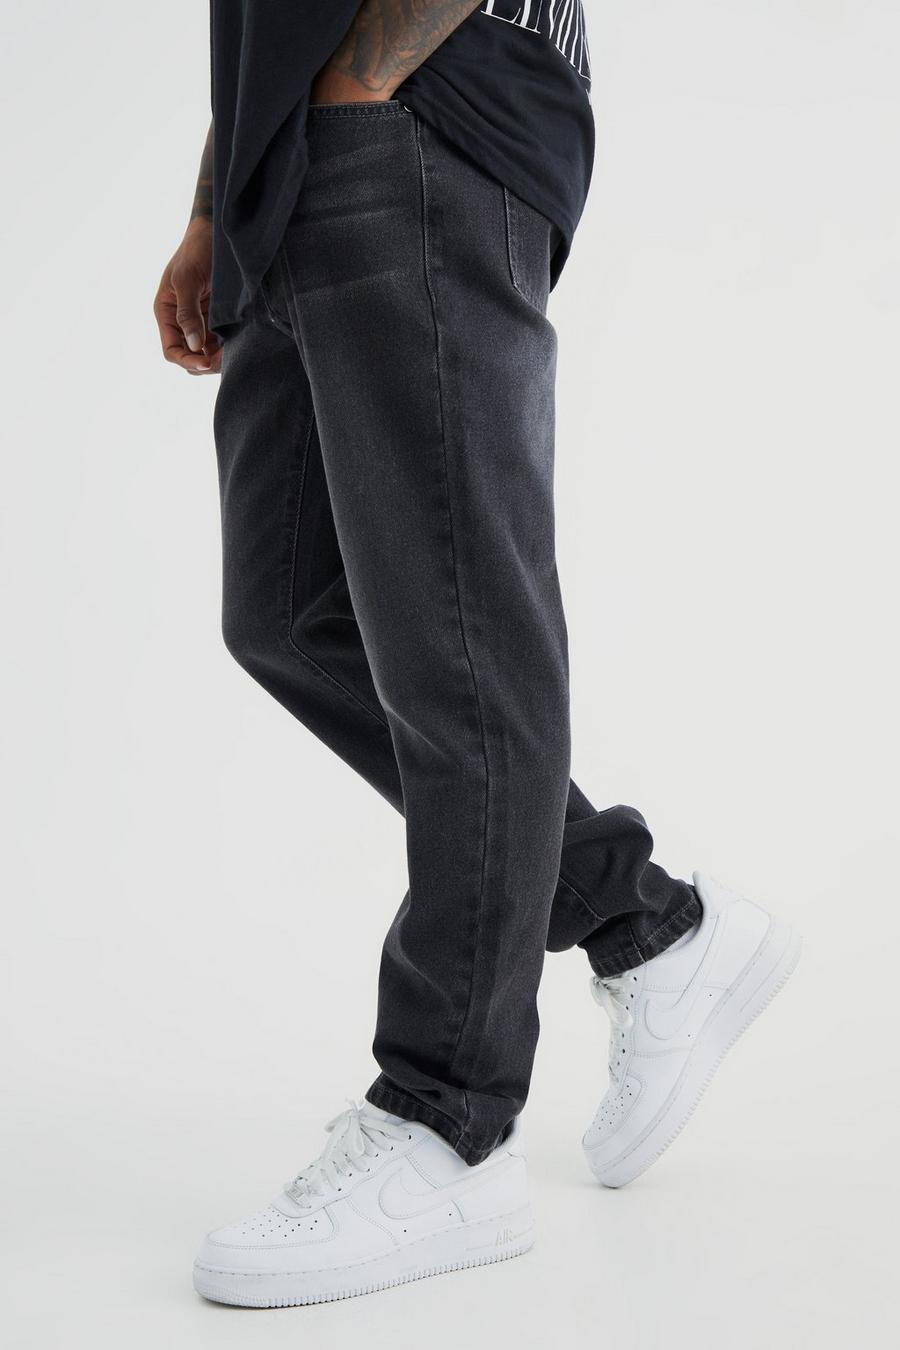 Slim Jeans, Charcoal gris